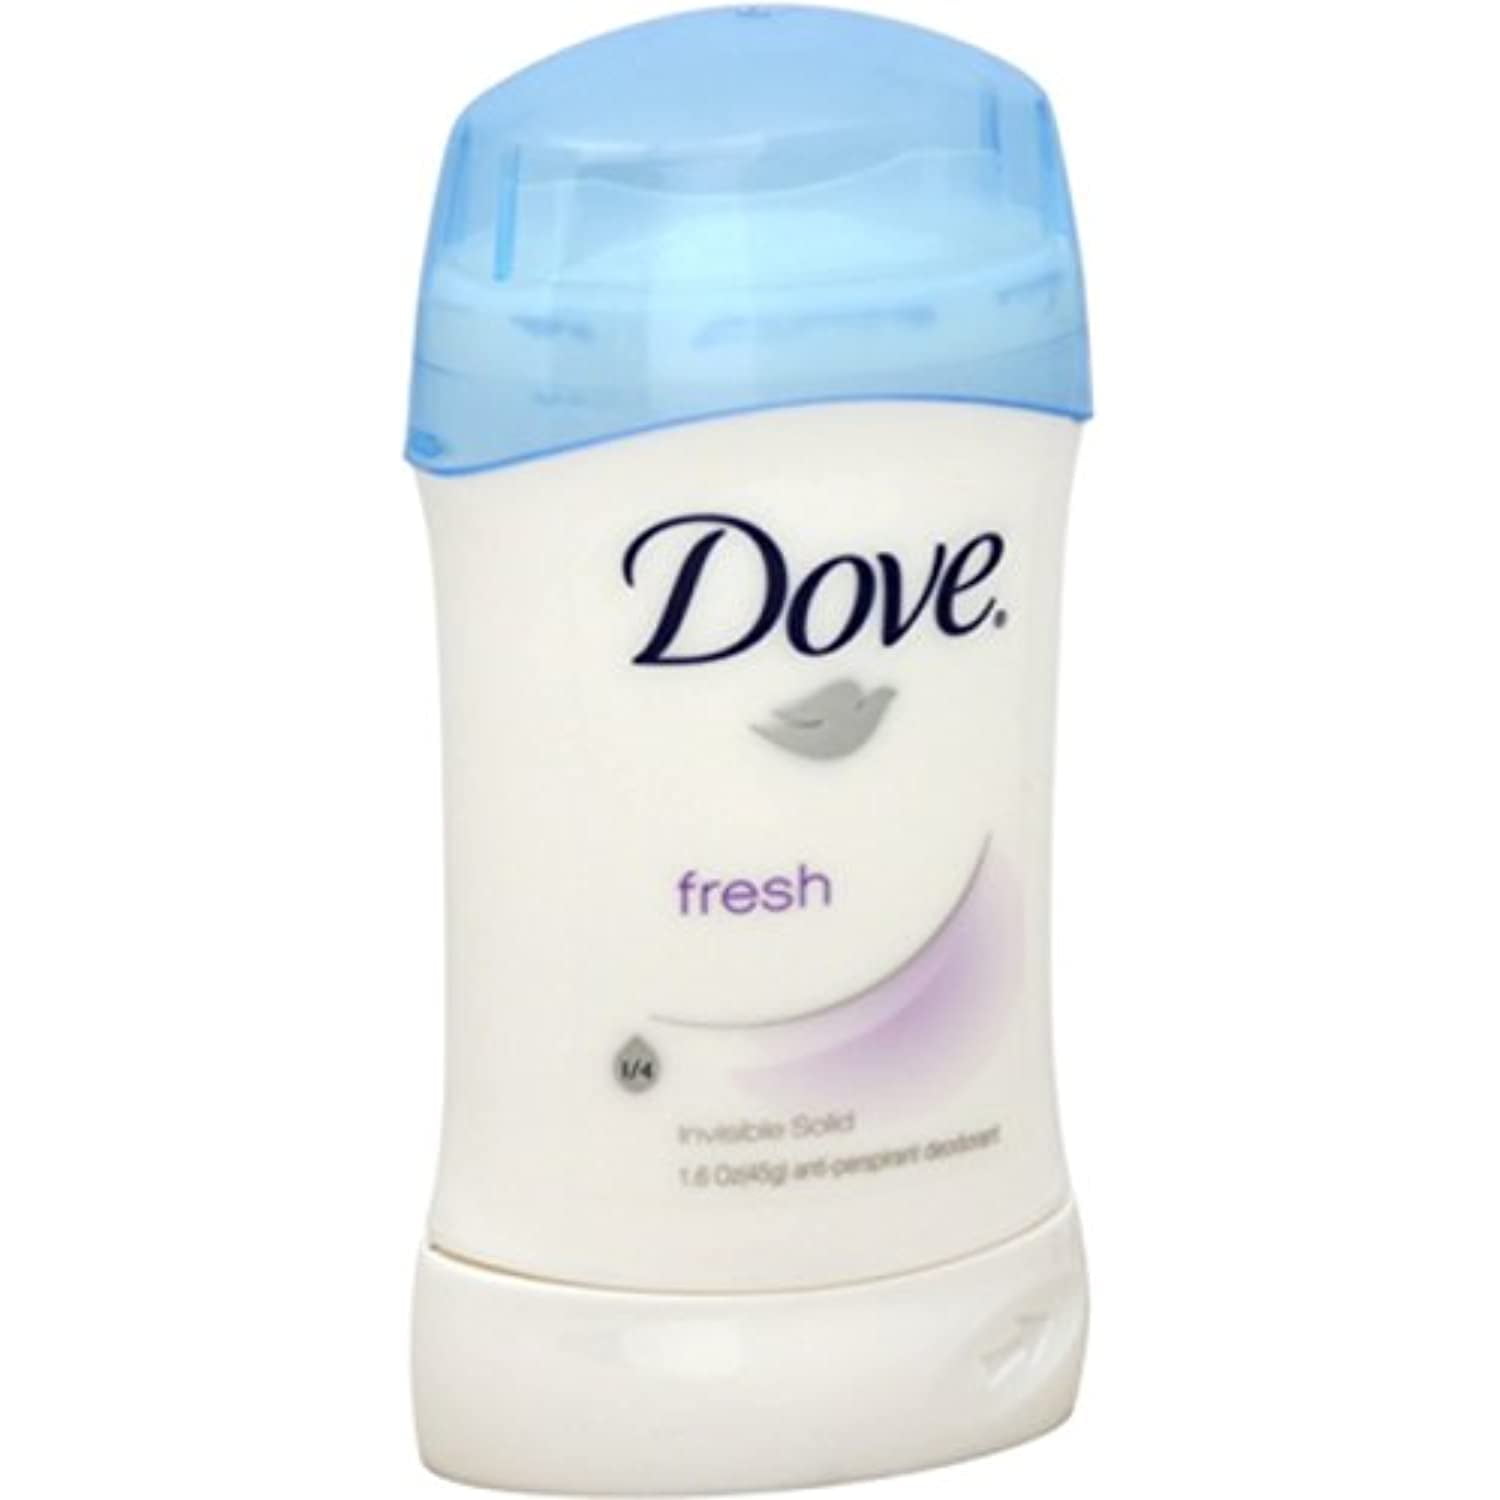 Dove Anti Perspirant Deodorant Invisible Solid Fresh 160 Oz Pack Of 3